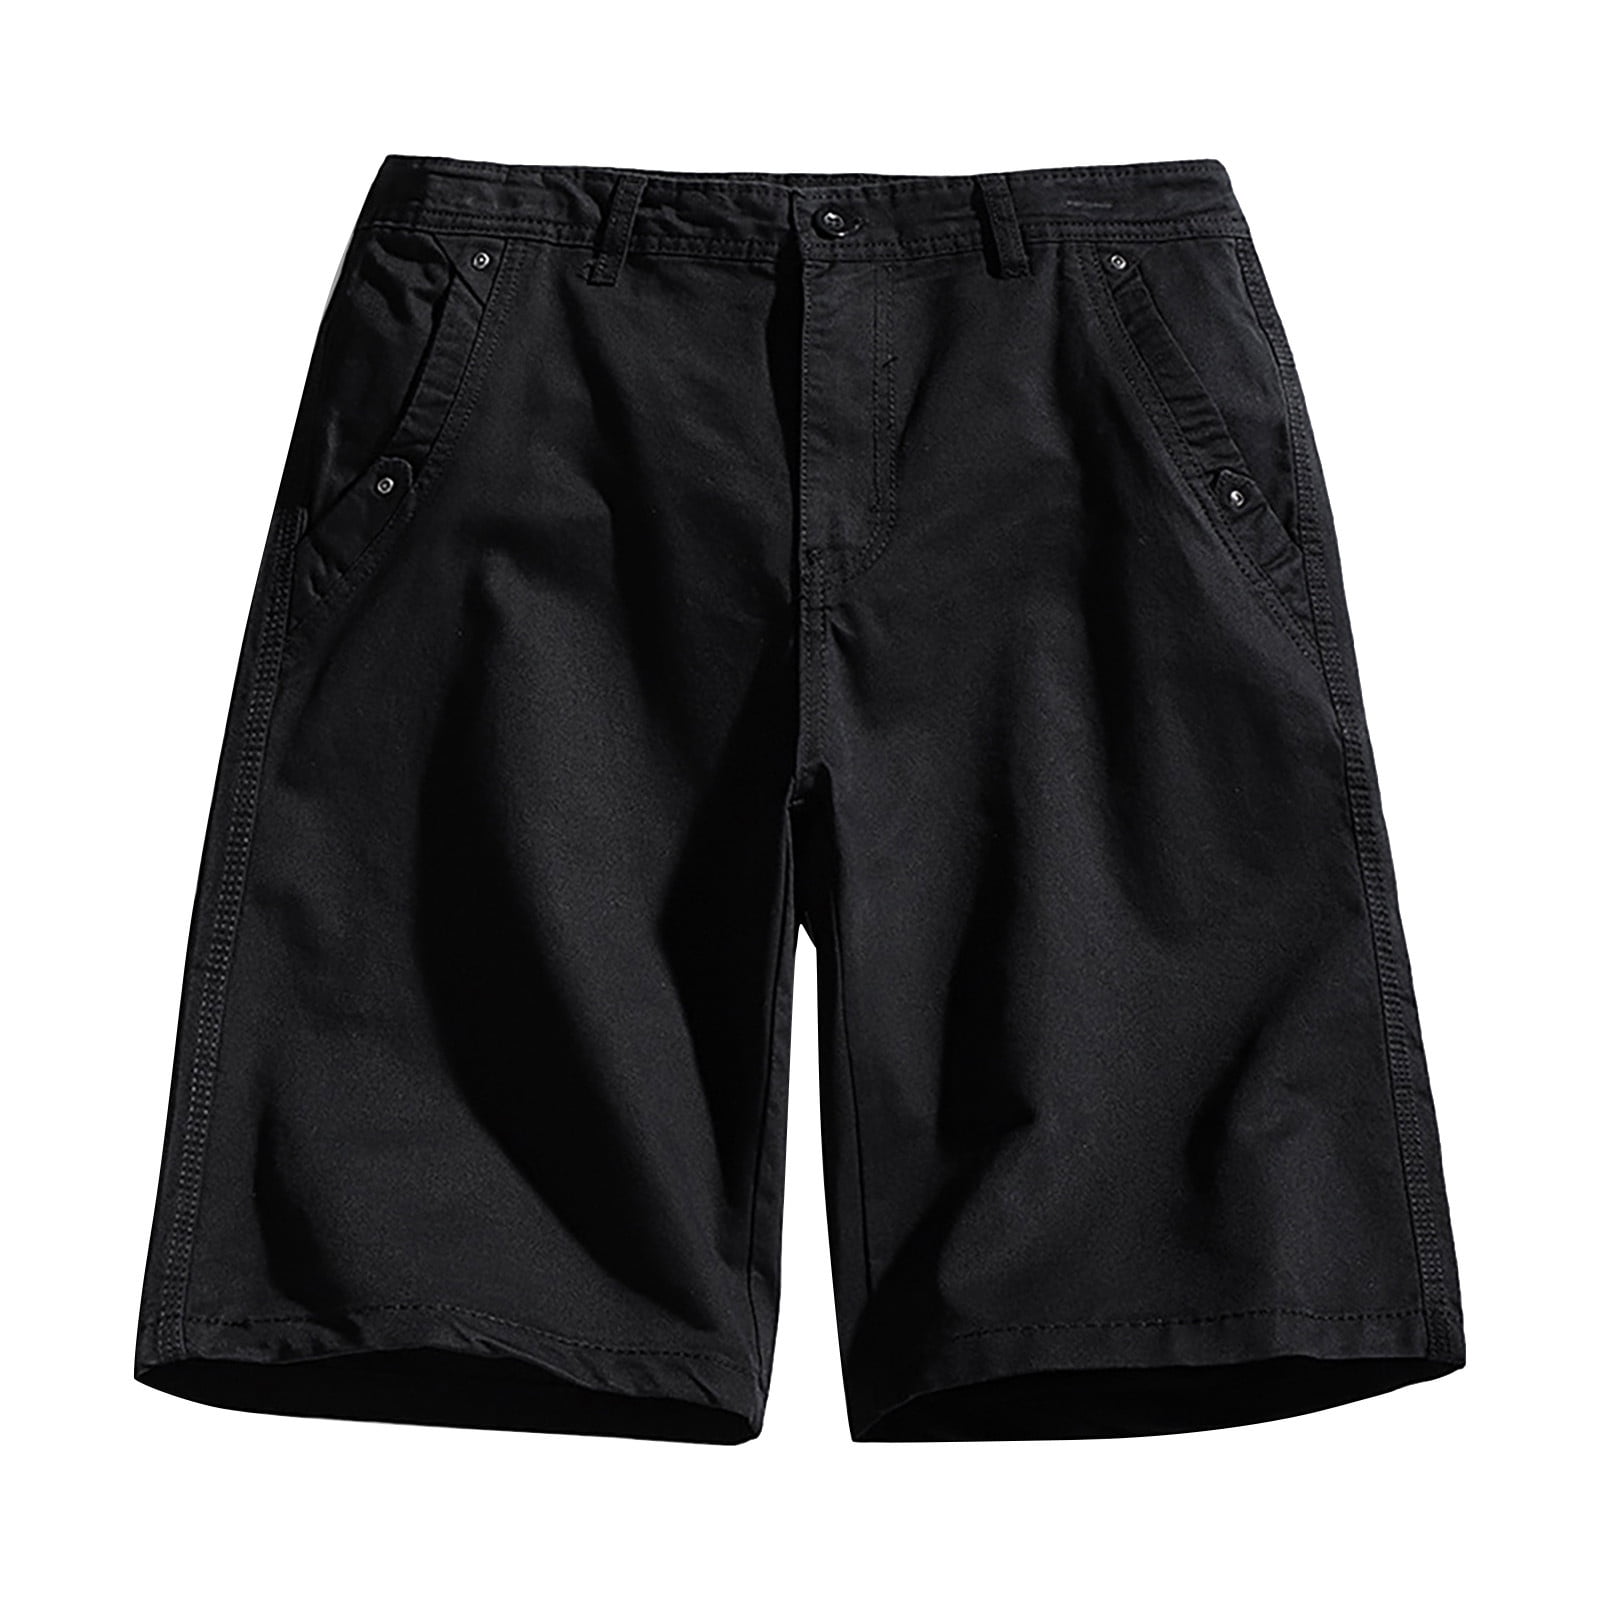 8QIDA Leisure Jogging Cargo Cotton Men's Summer Shorts Shorts Vintage ...